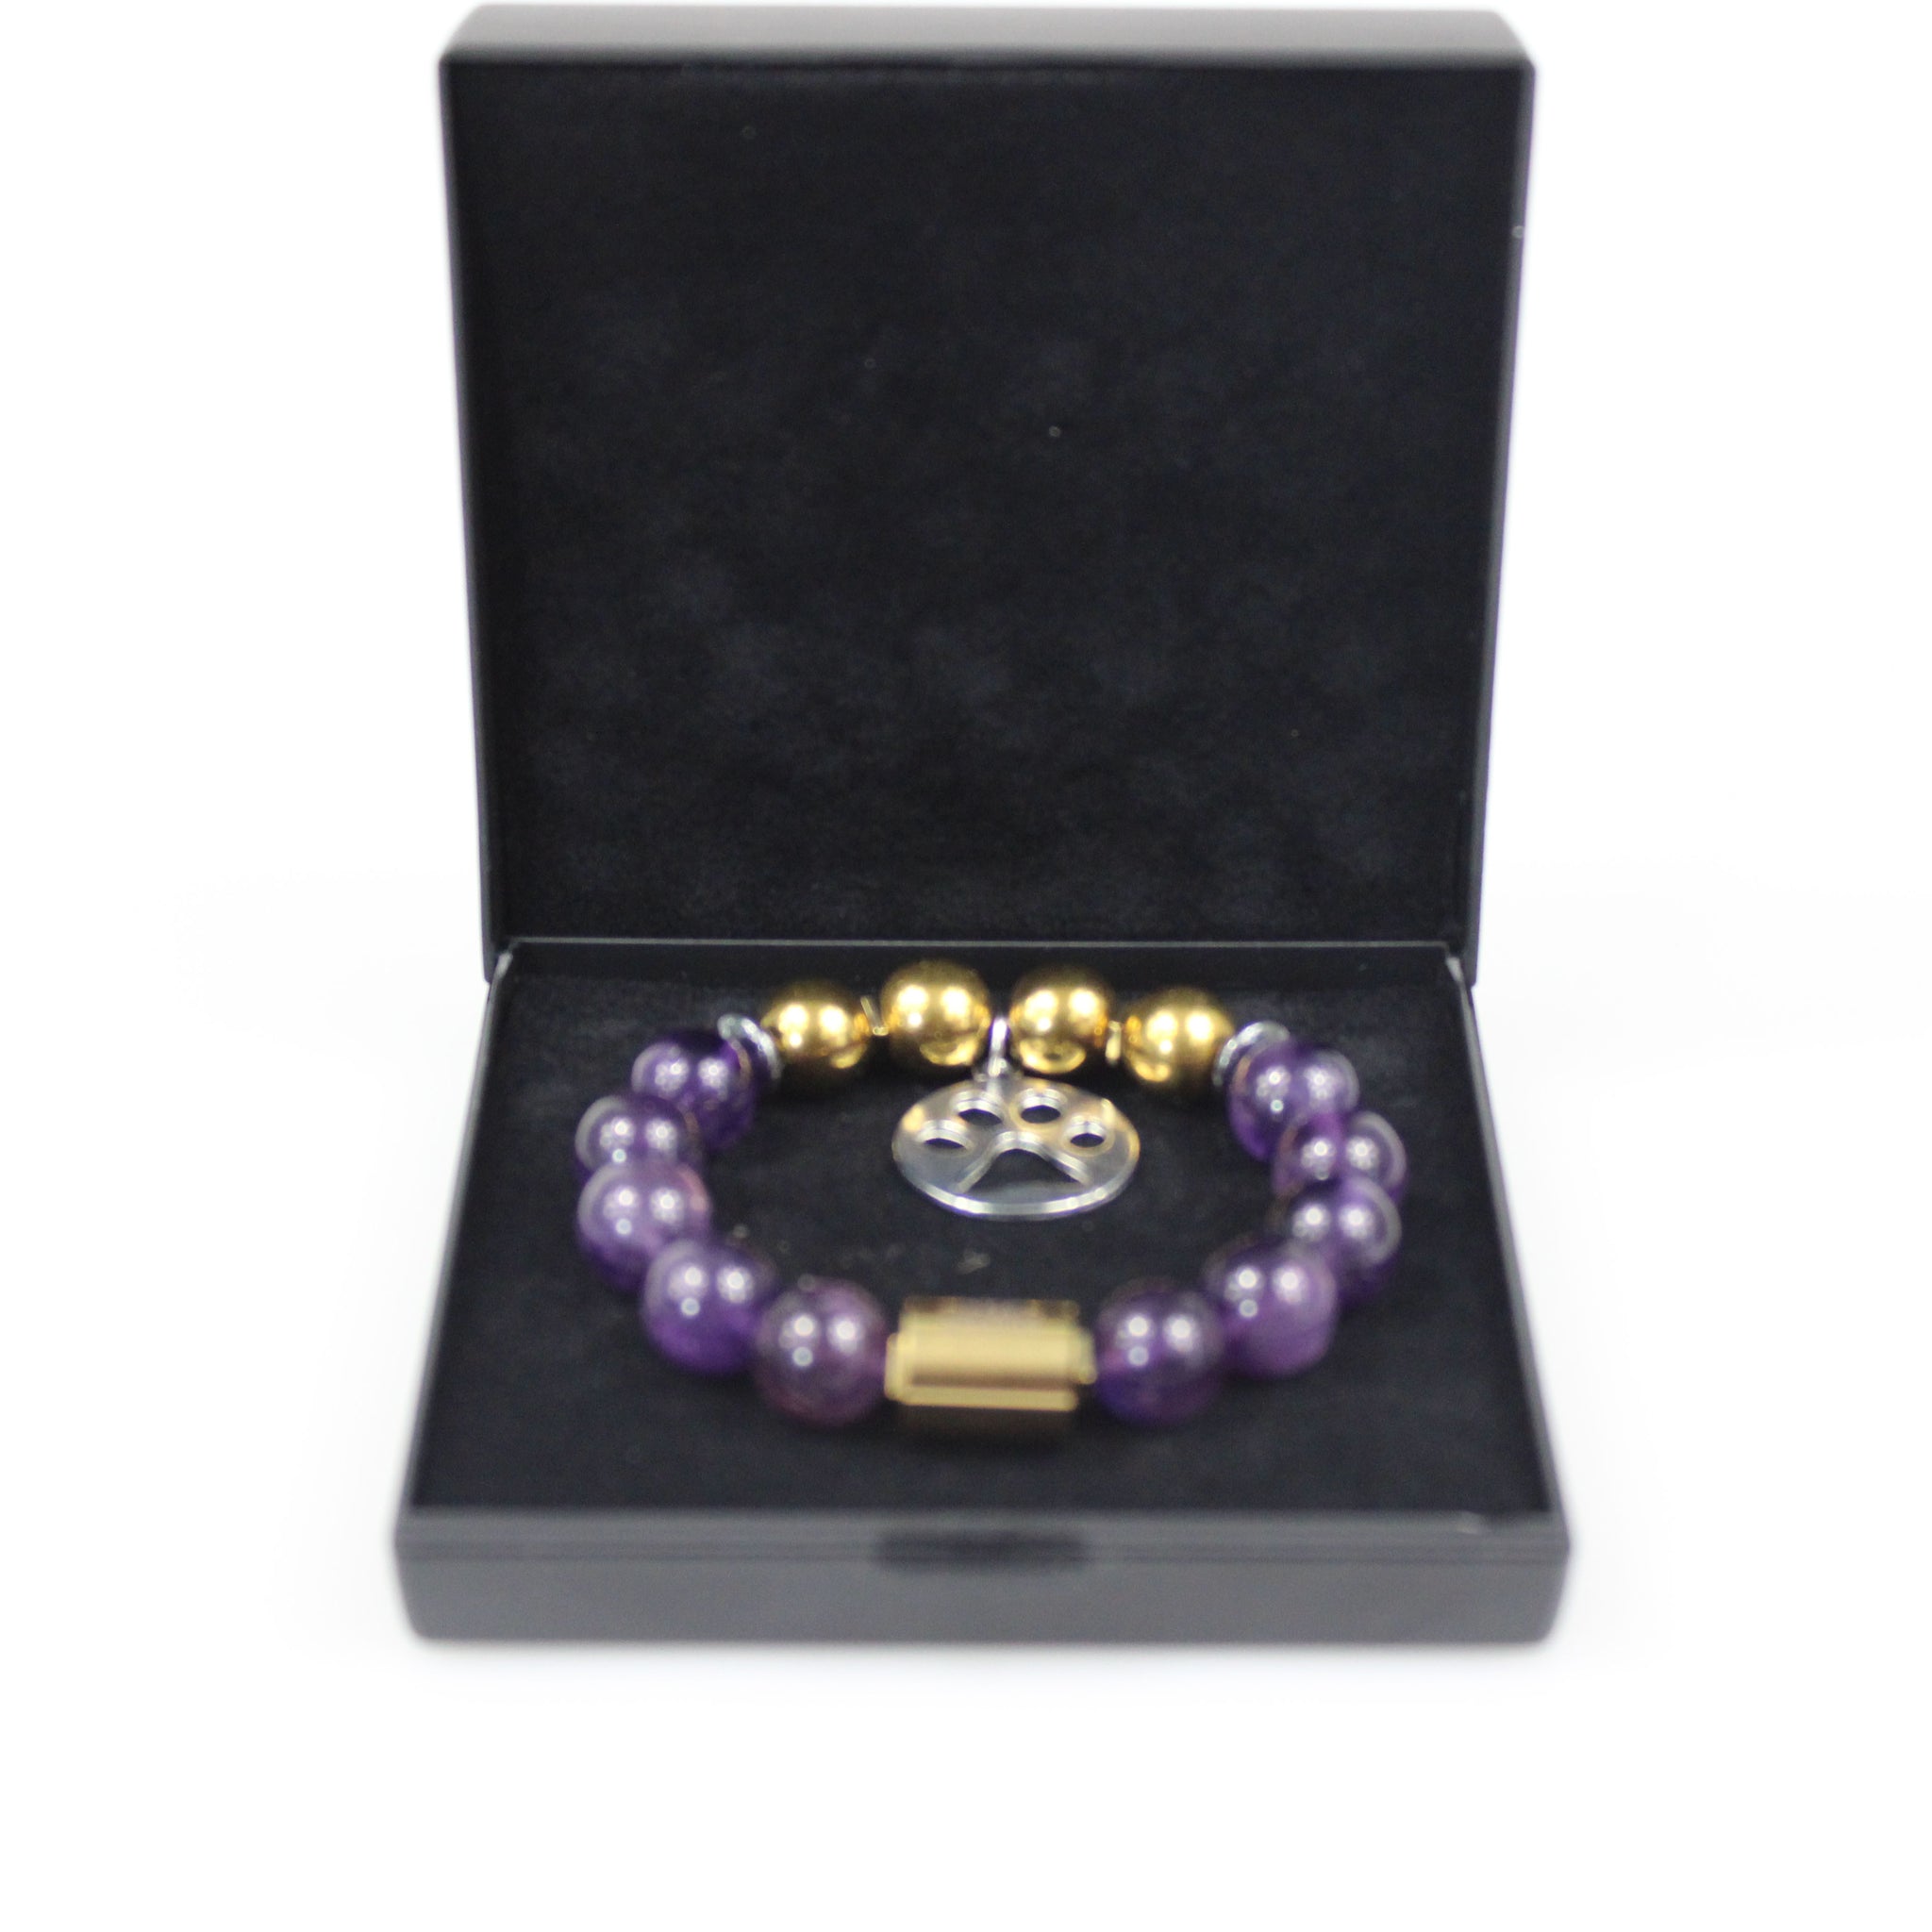 omega psi phi dog paw charm bead bracelet gift box